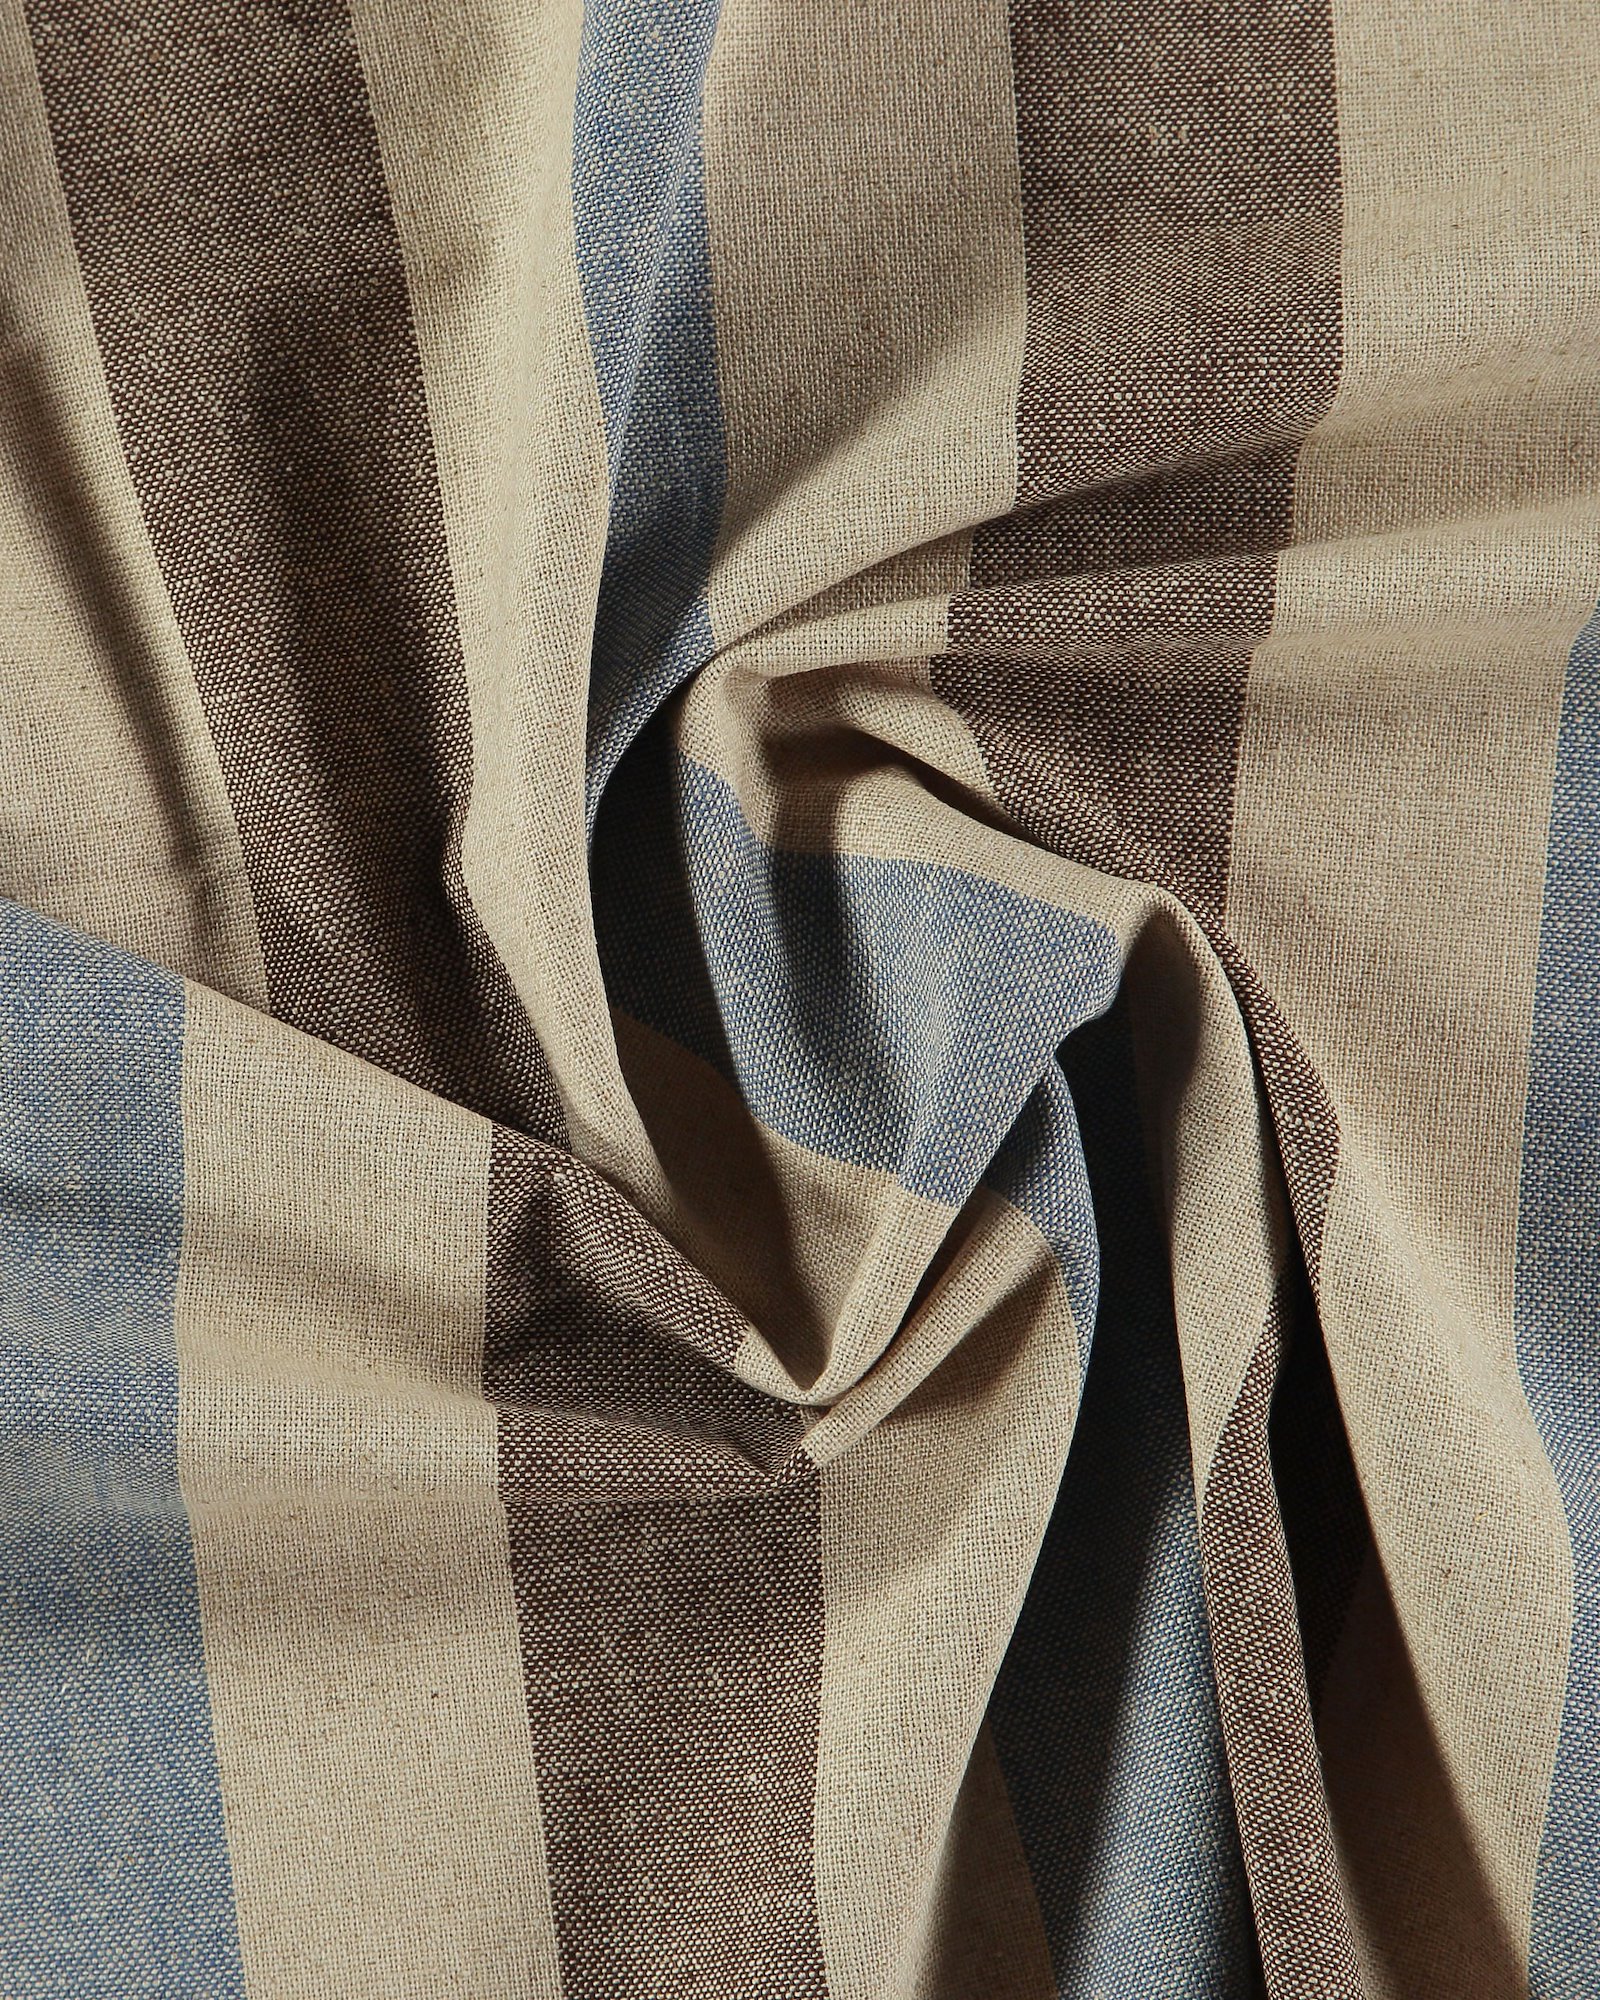 Coarse YD linen/cotton stripe 410149_pack